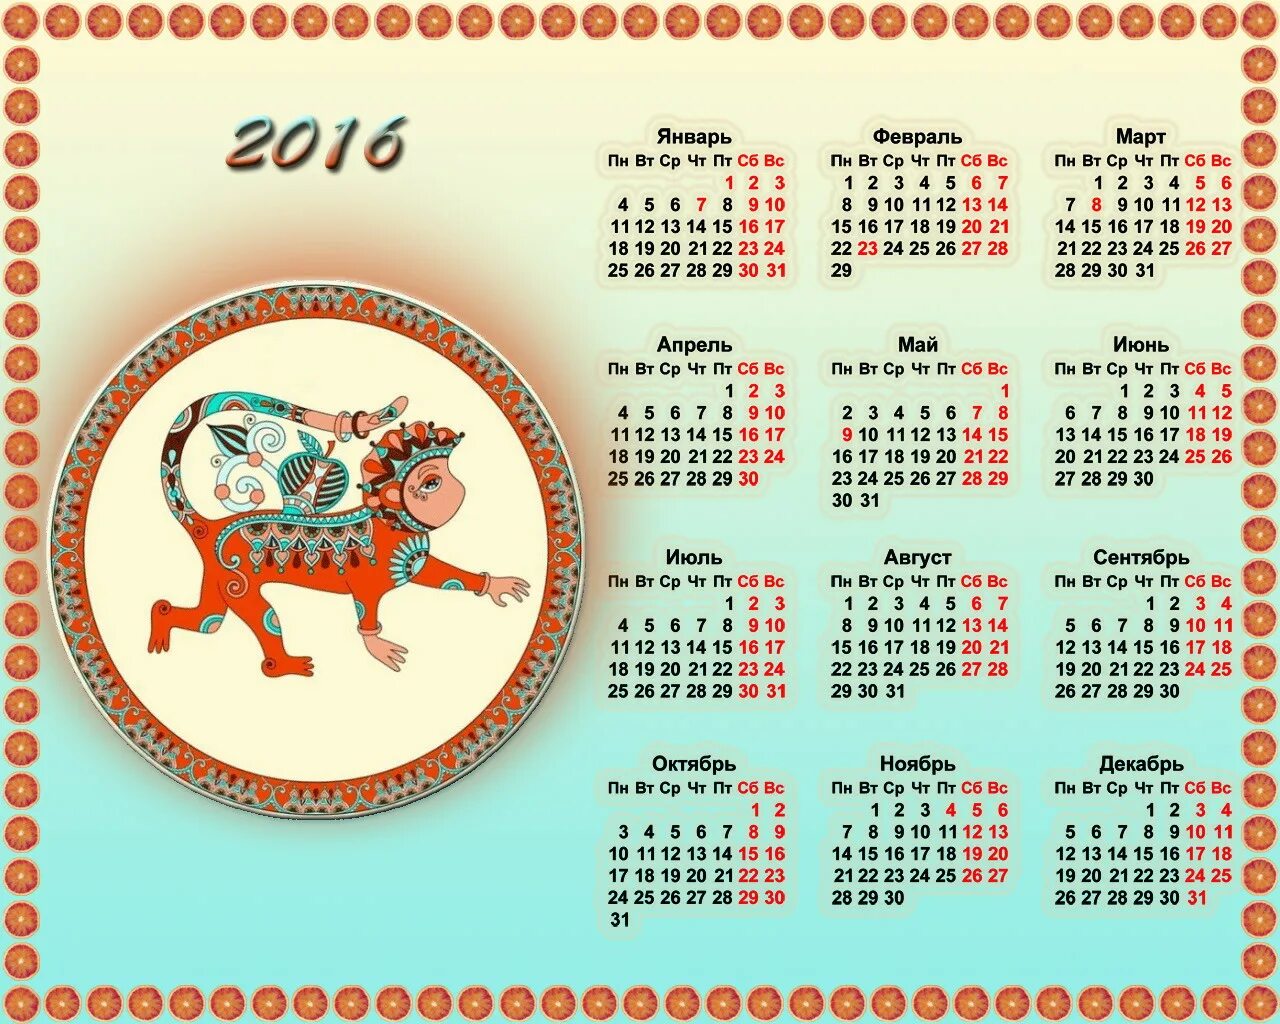 Какой год был без лета. Календарь на год. Календарь 2016 года. 2016 Год Восточный календарь. Восточный календарь по годам 2016 год.